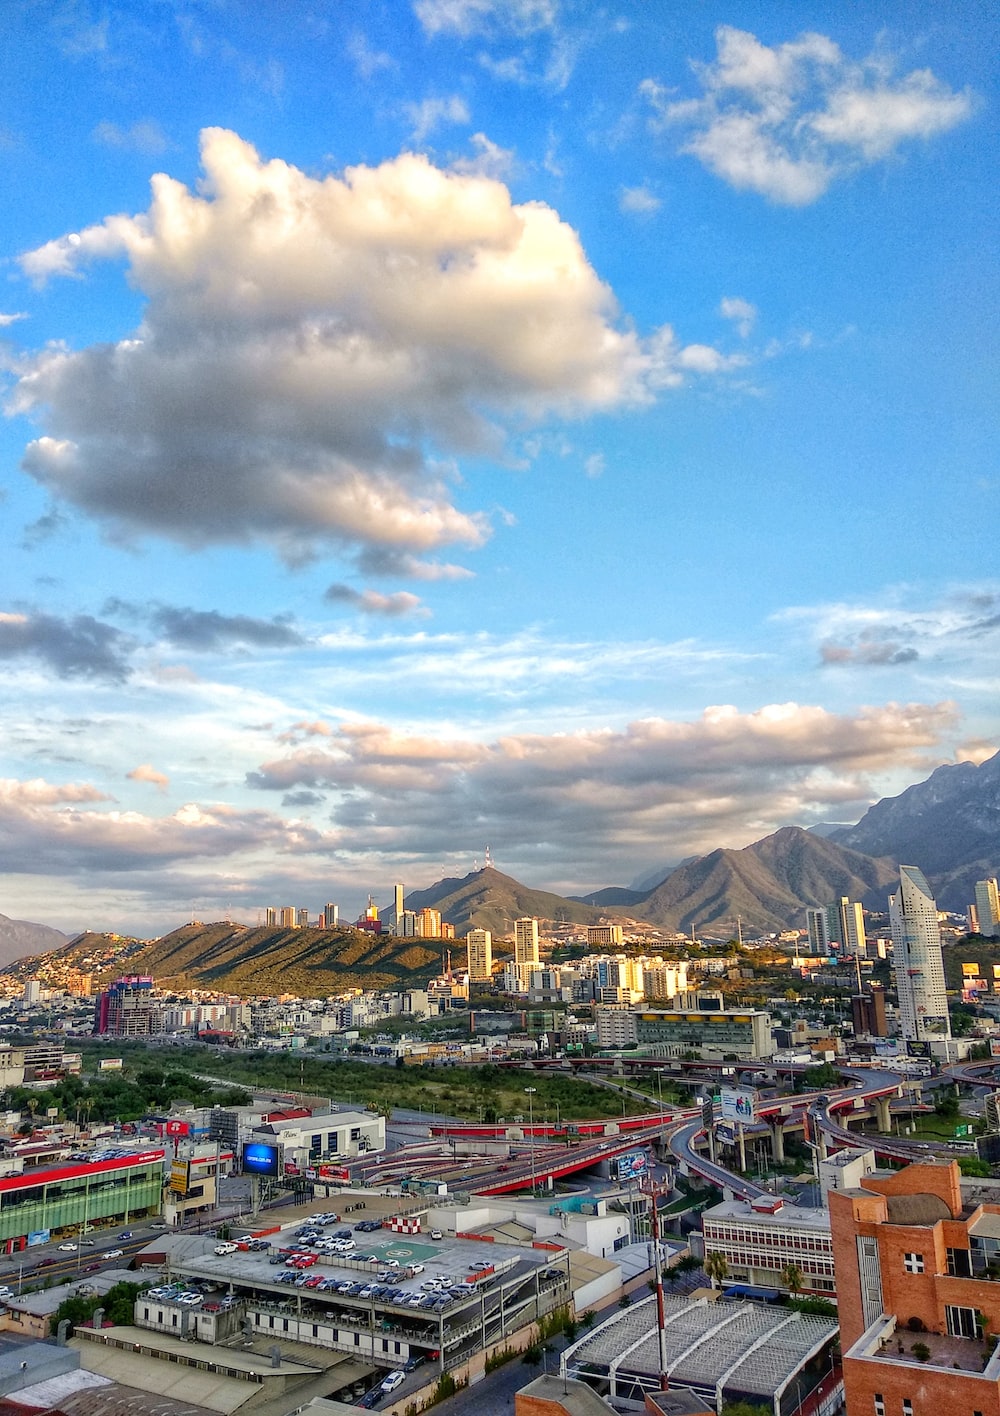 Monterrey Nuevo Leon Picture. Download Free Image